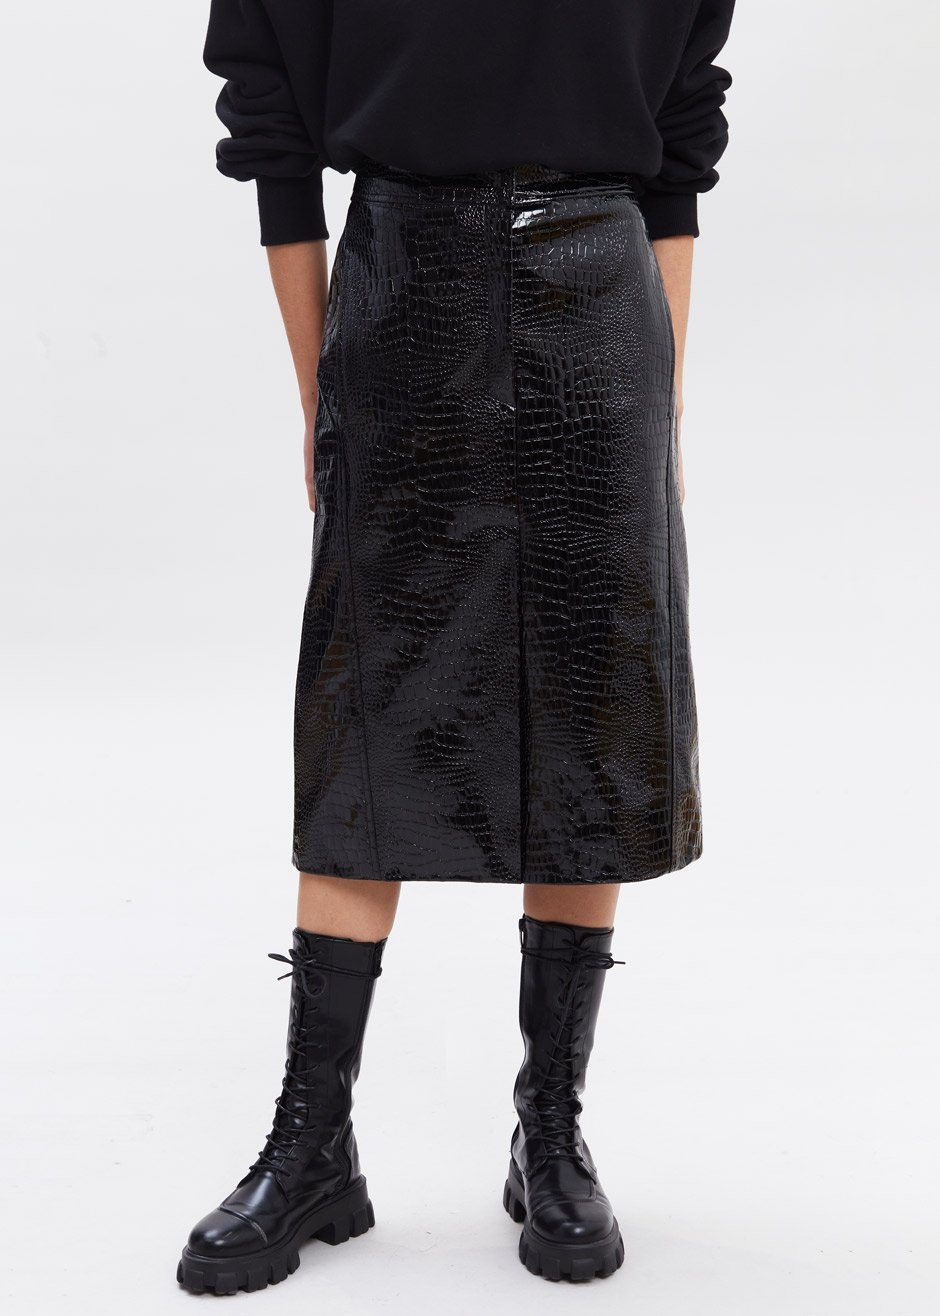 Croc Embossed Patent Midi Skirt in Black – The Frankie Shop